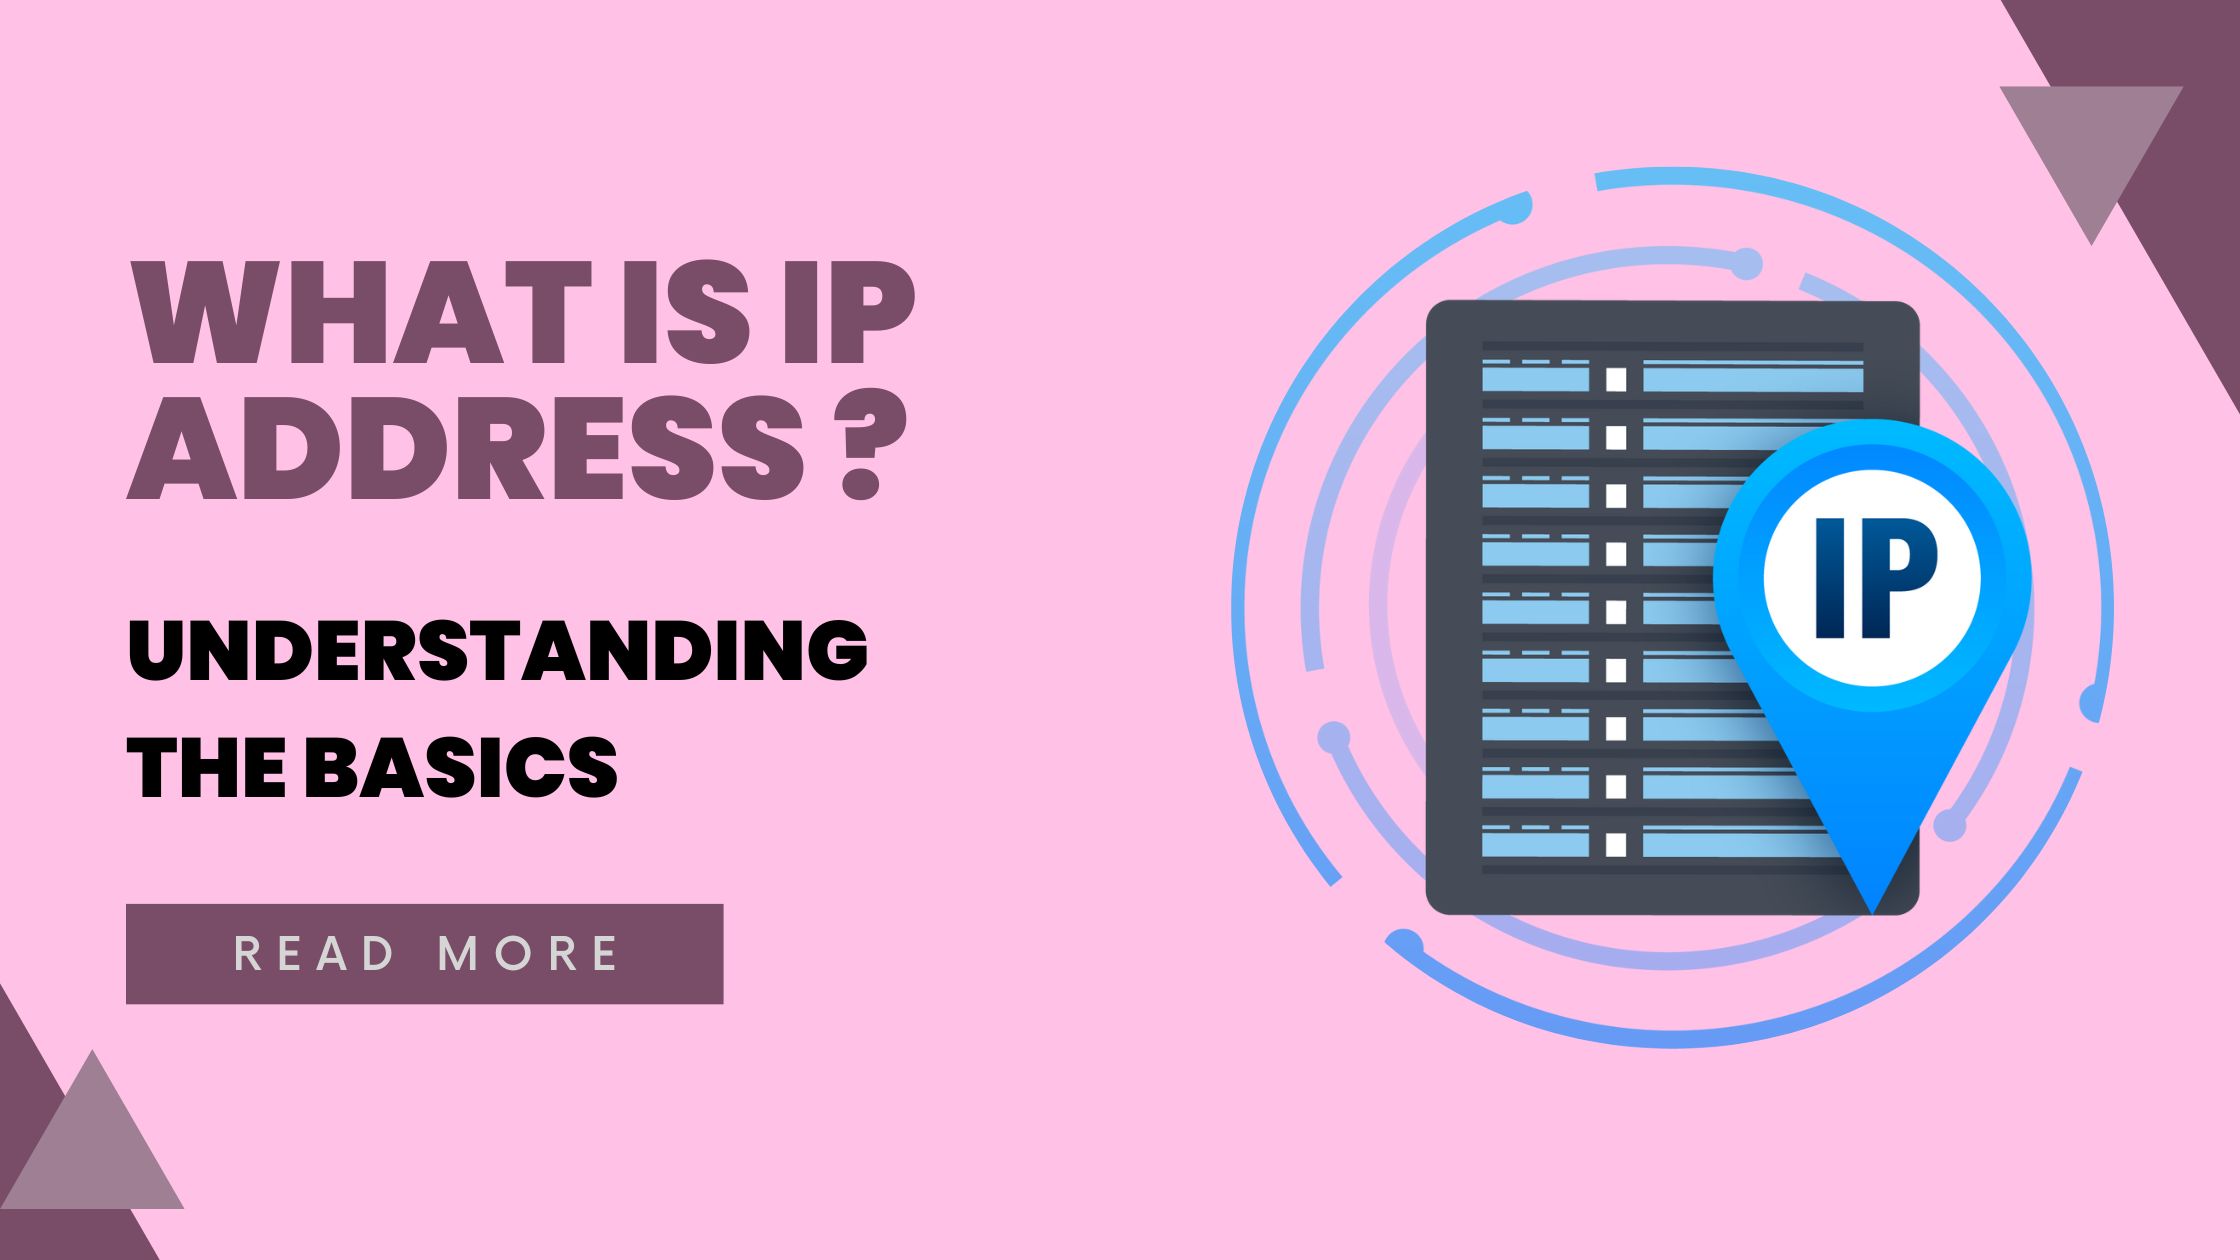 What is ip address - Understanding the basics?